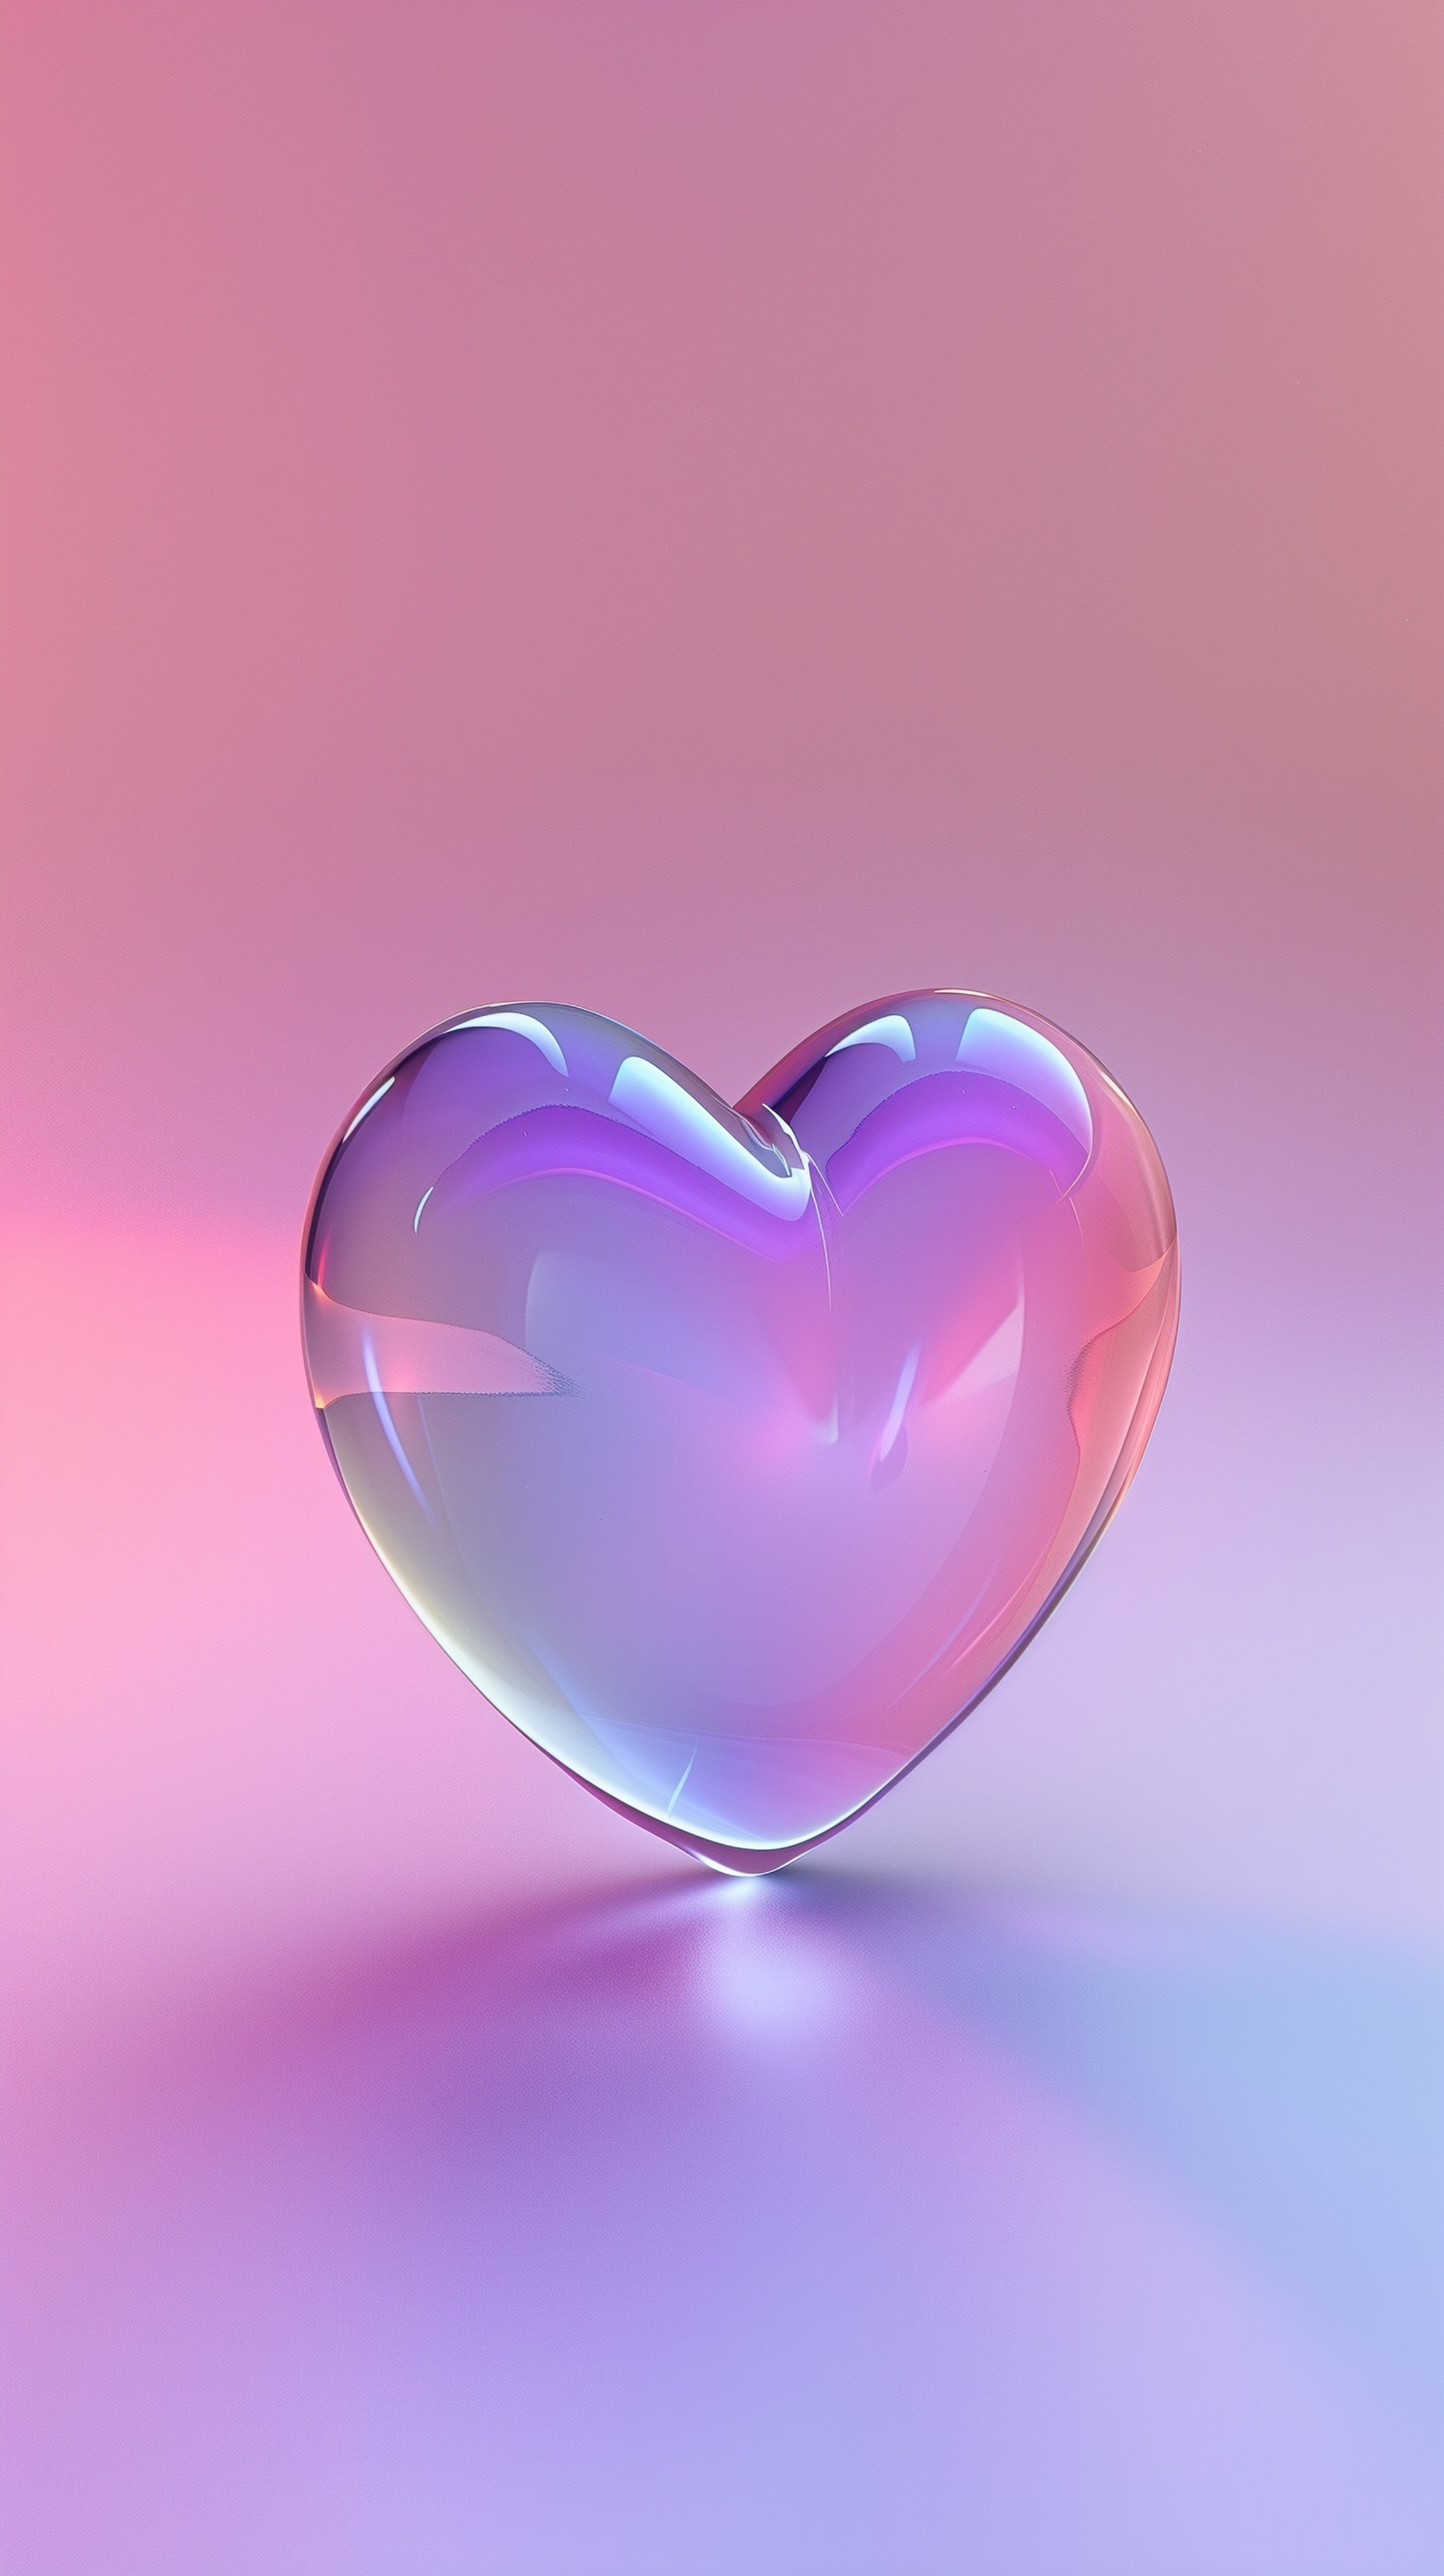 Colorful Glass Heart on Pink Background Fondo de pantalla[47d8940110524ca1b371]